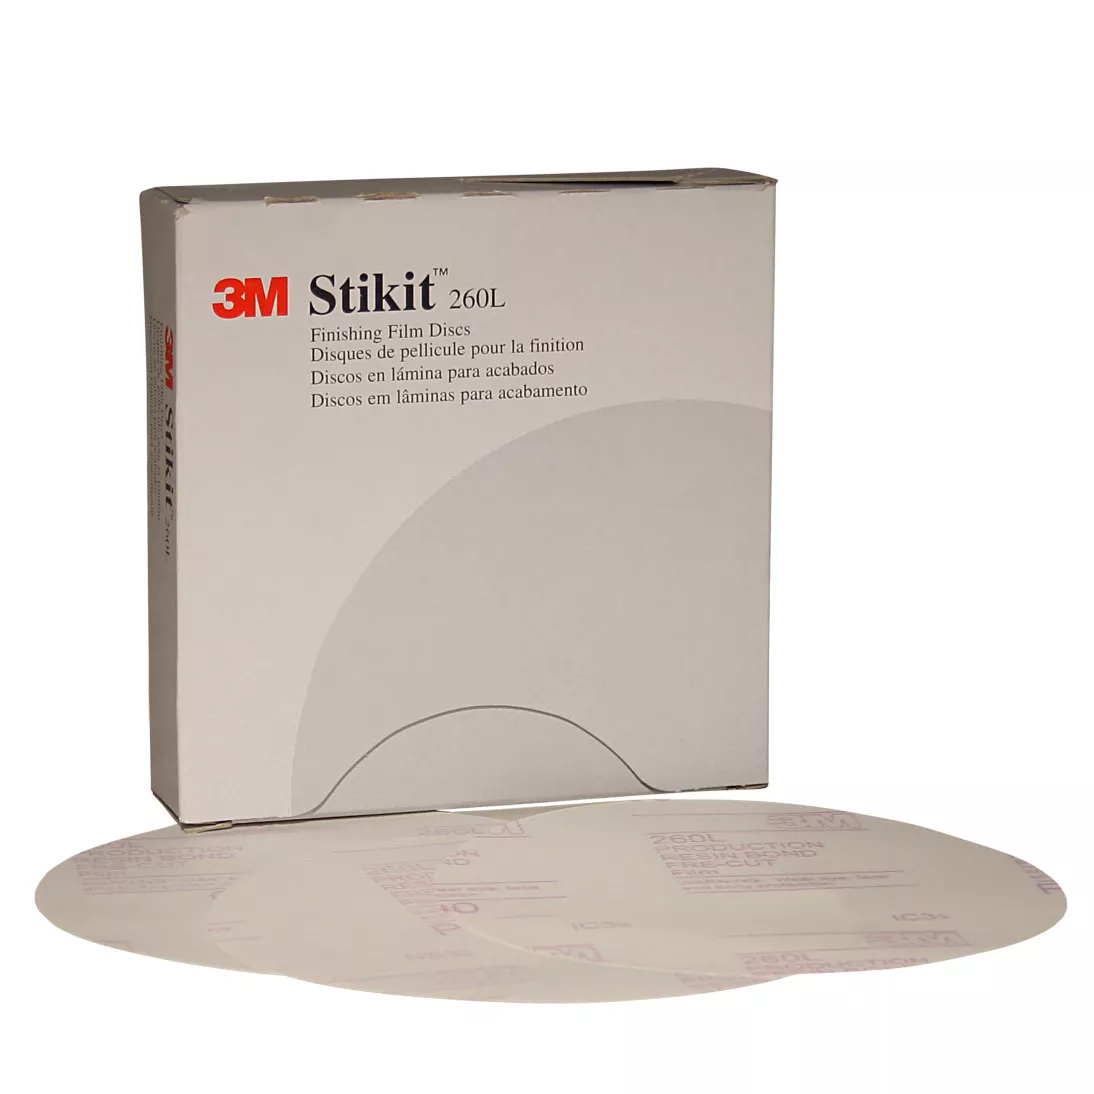 3M™ Stikit™ Finishing Film Disc, 83678, 5 in, P600 grade, 100 discs per
carton, 4 cartons per case